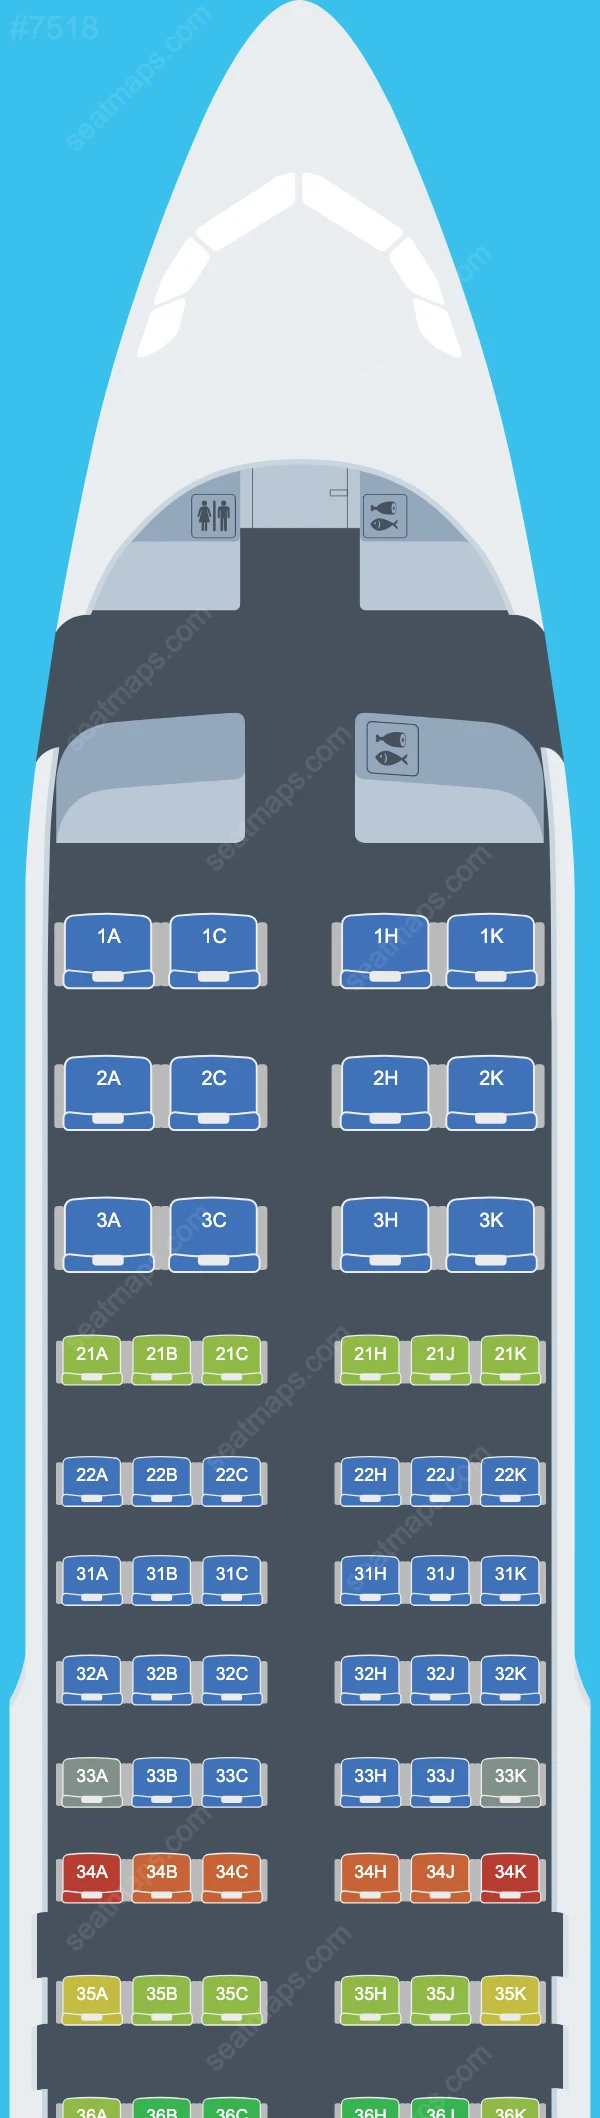 PAL Express Airbus A320 Seat Maps A320-200 V.1